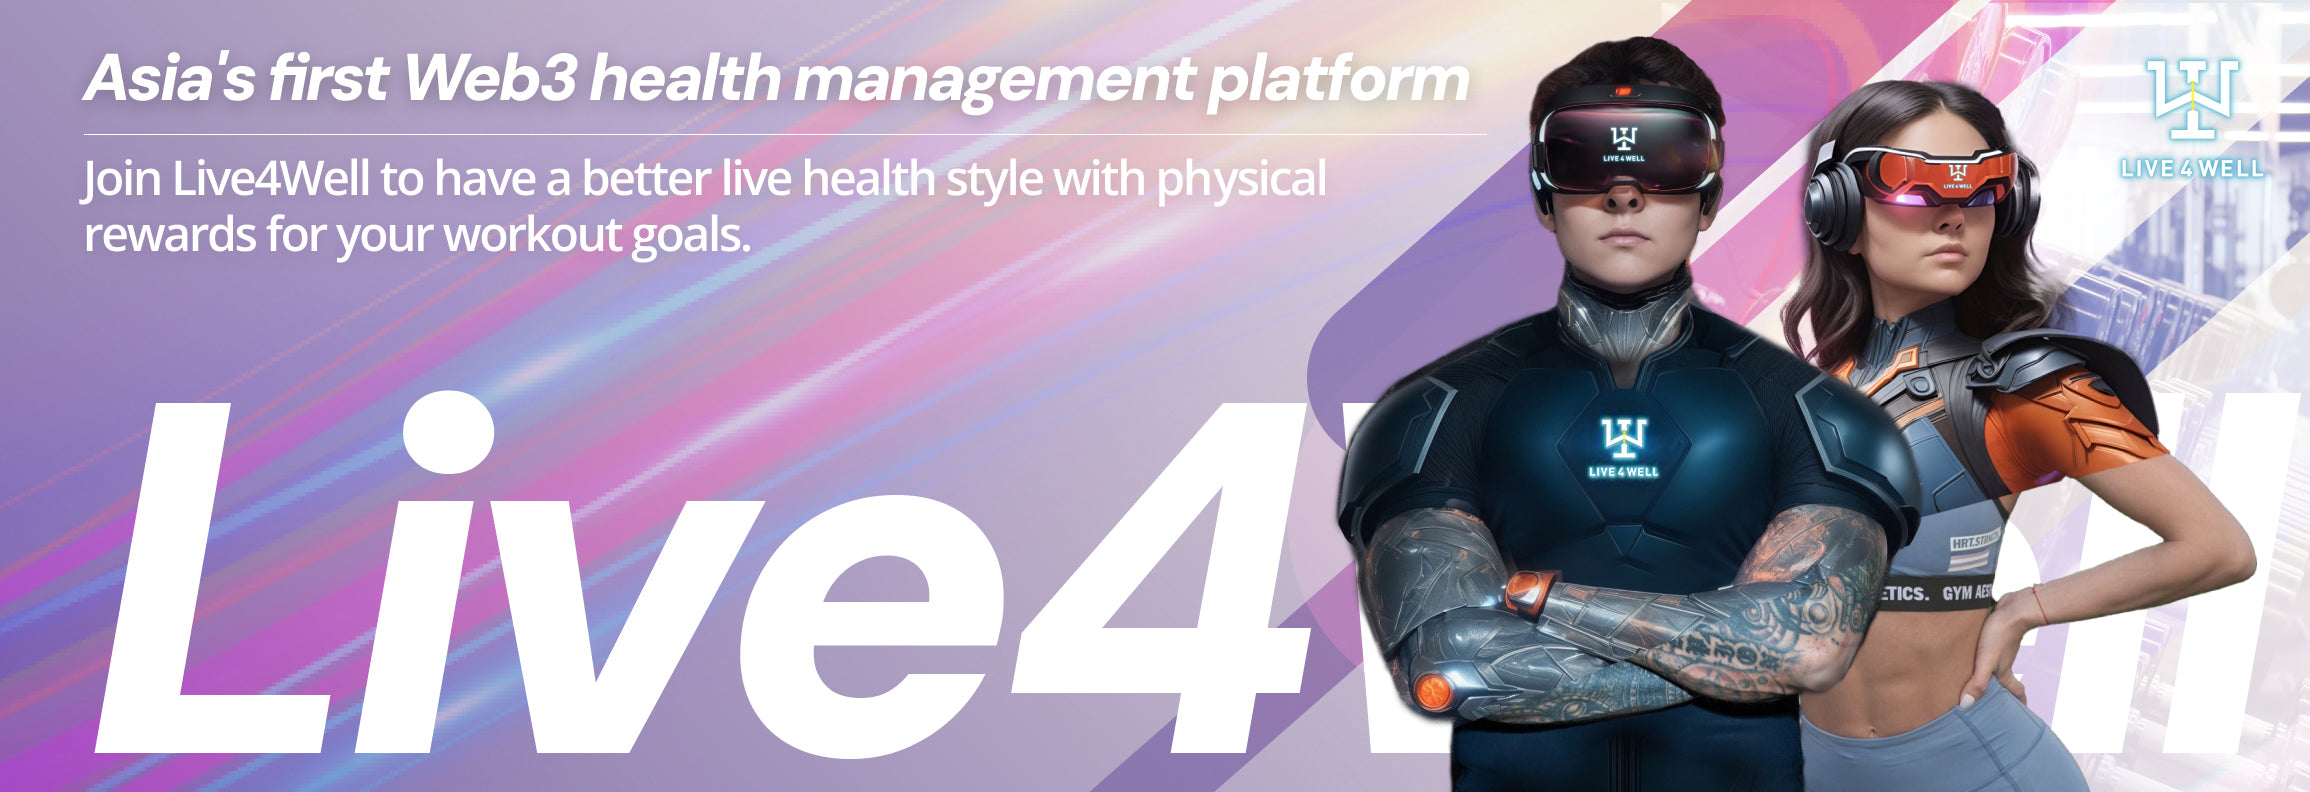 Live4Well - Asia's first web3 health management platform